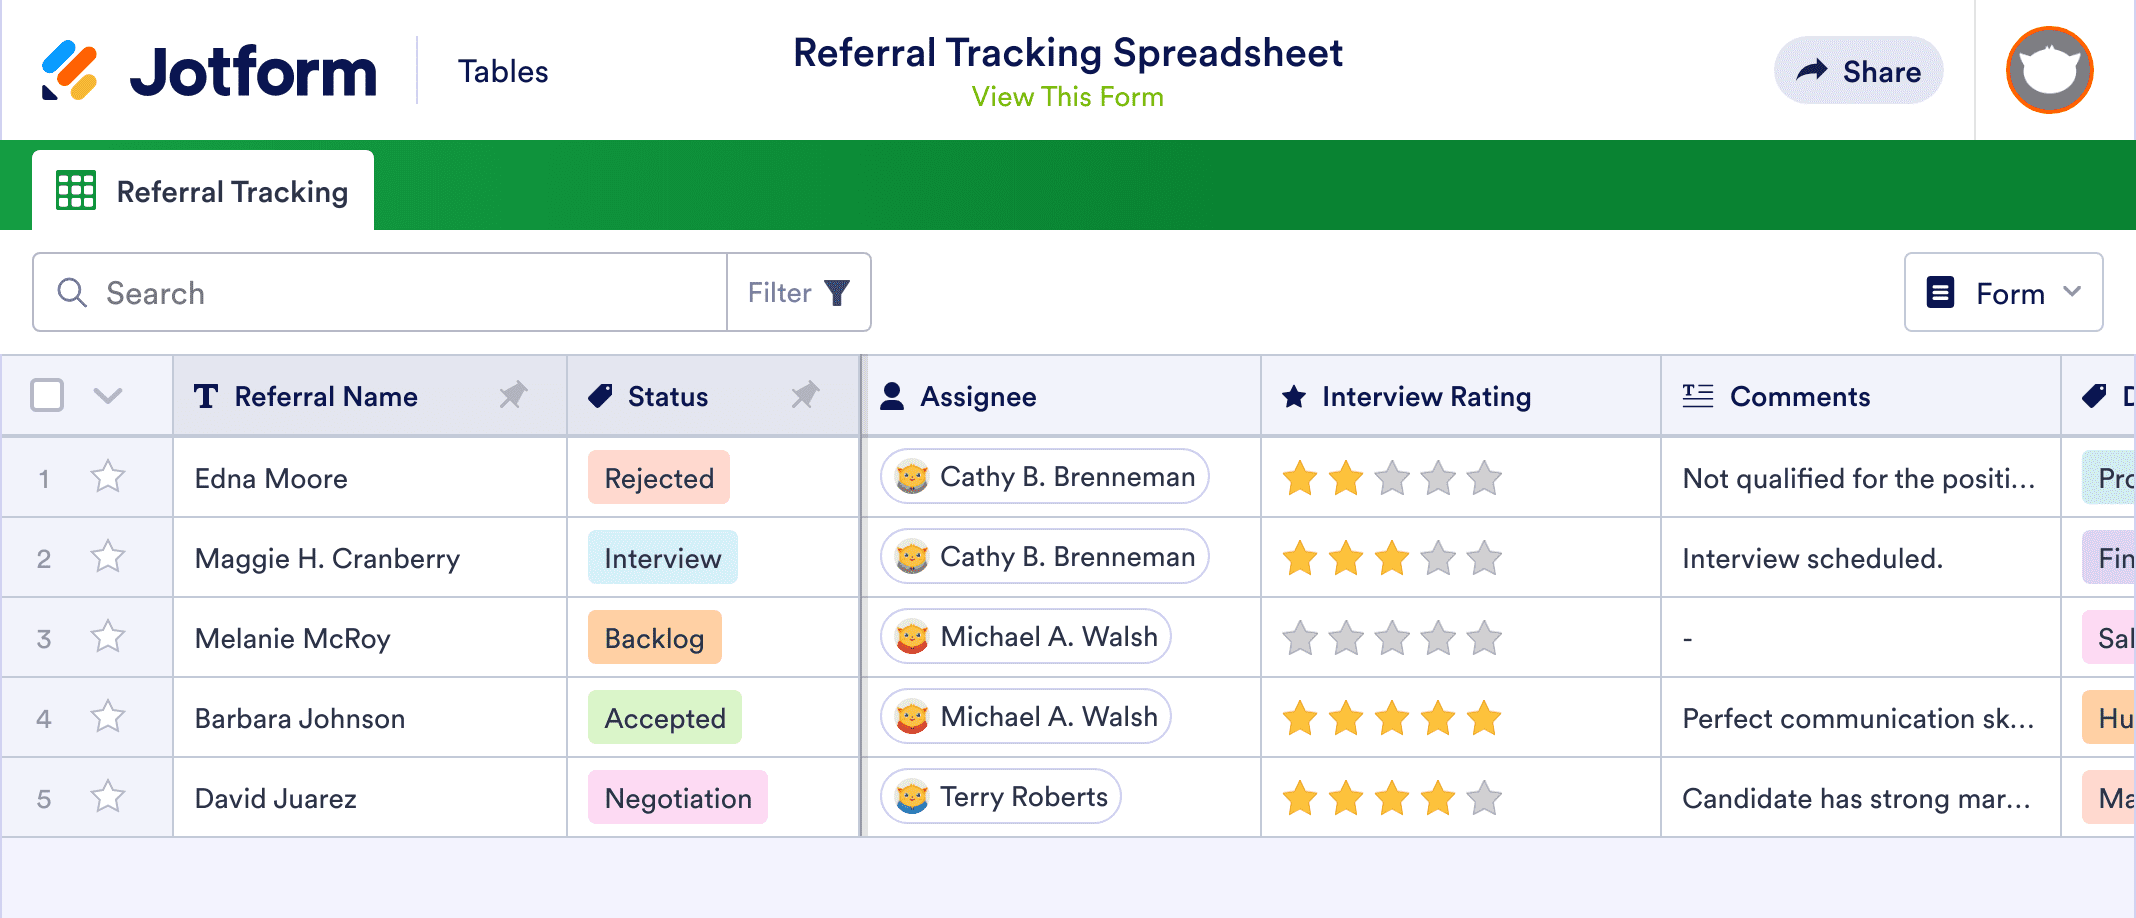 Referral Tracking Spreadsheet